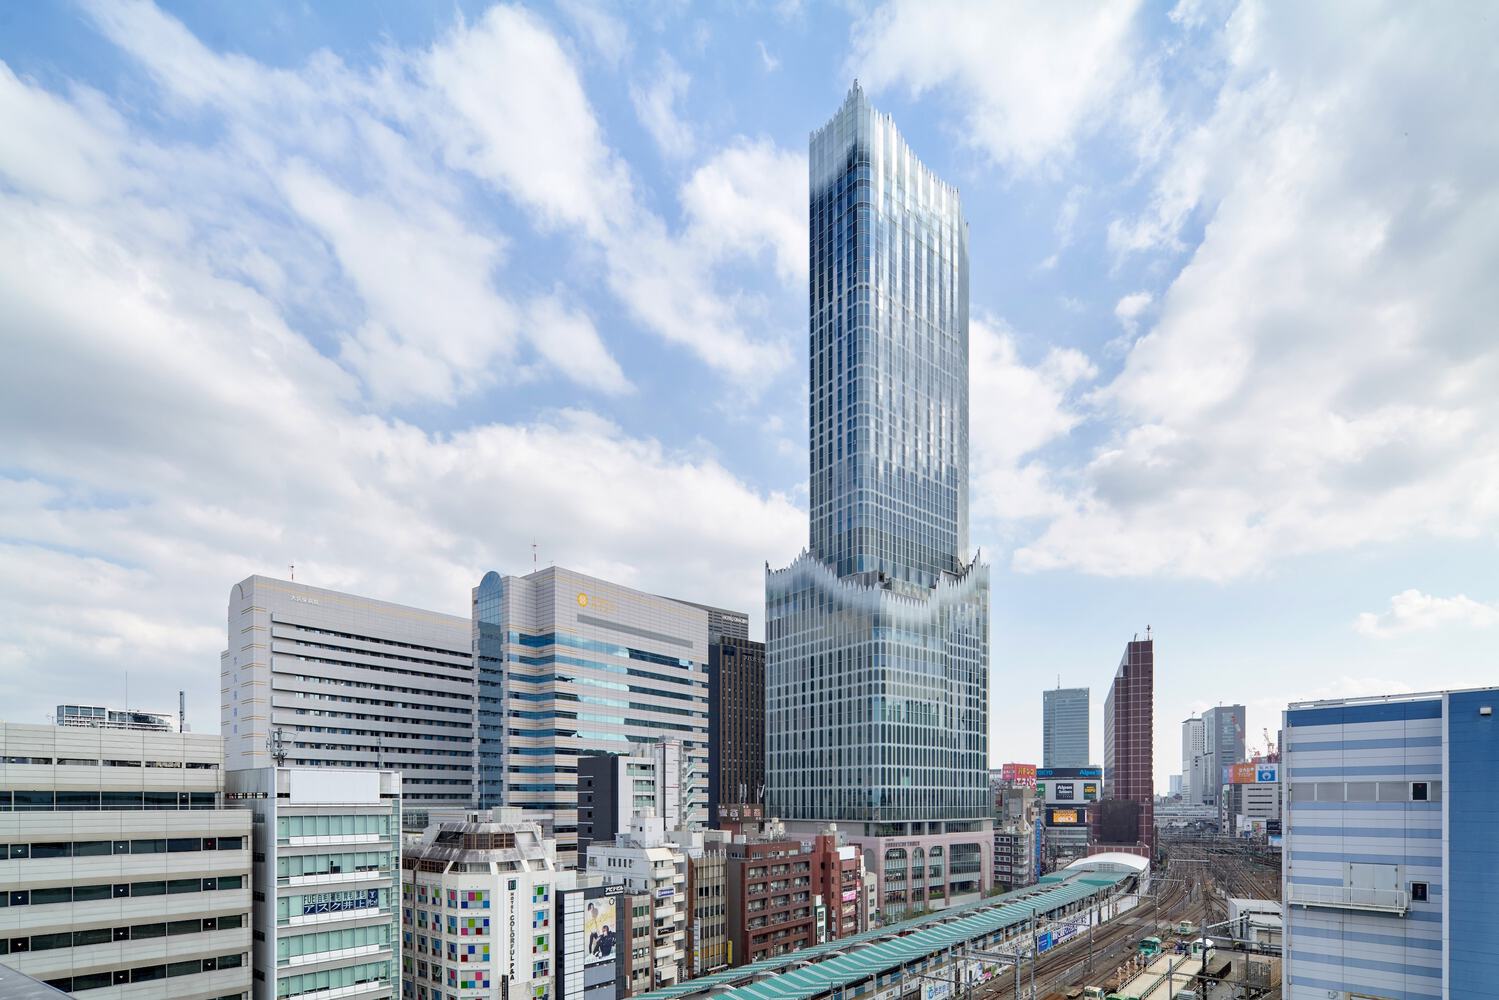 Tokyu kabukicho tower / yuko nagayama & associates + kume sekkei co. + tokyu architects & engineers